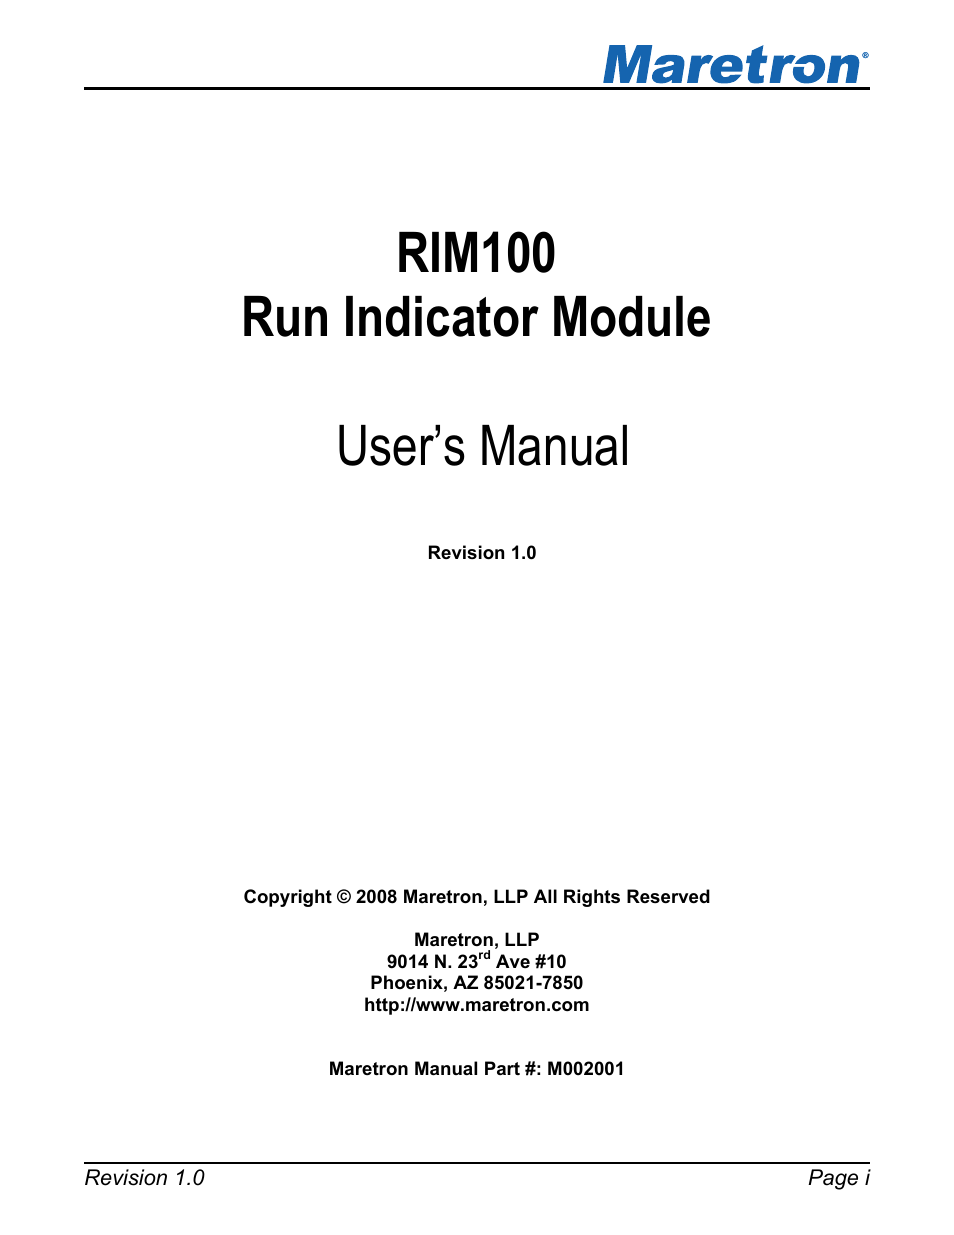 Run Indicator Module RIM100